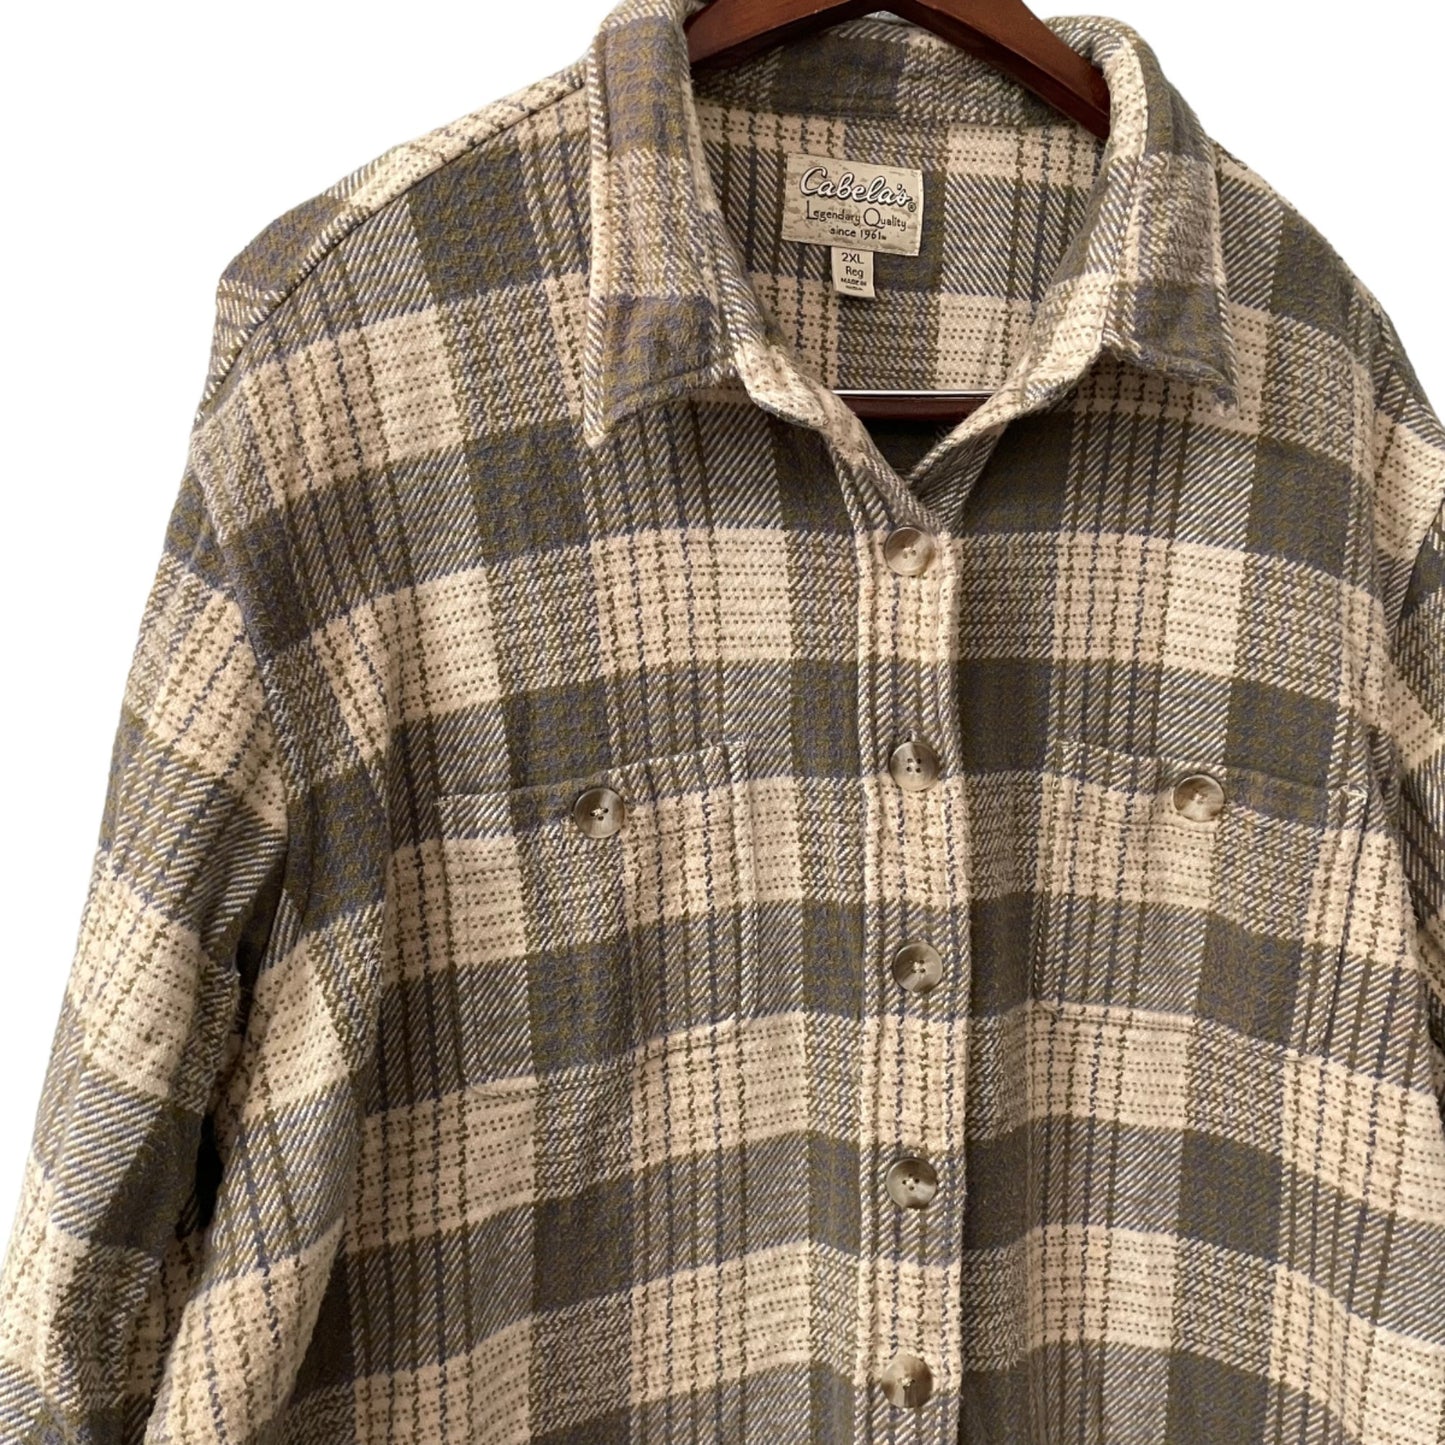 Cabela's Beige Plaid Button Up Shirt Men's Size 2XL Regular 100% Cotton Shacket